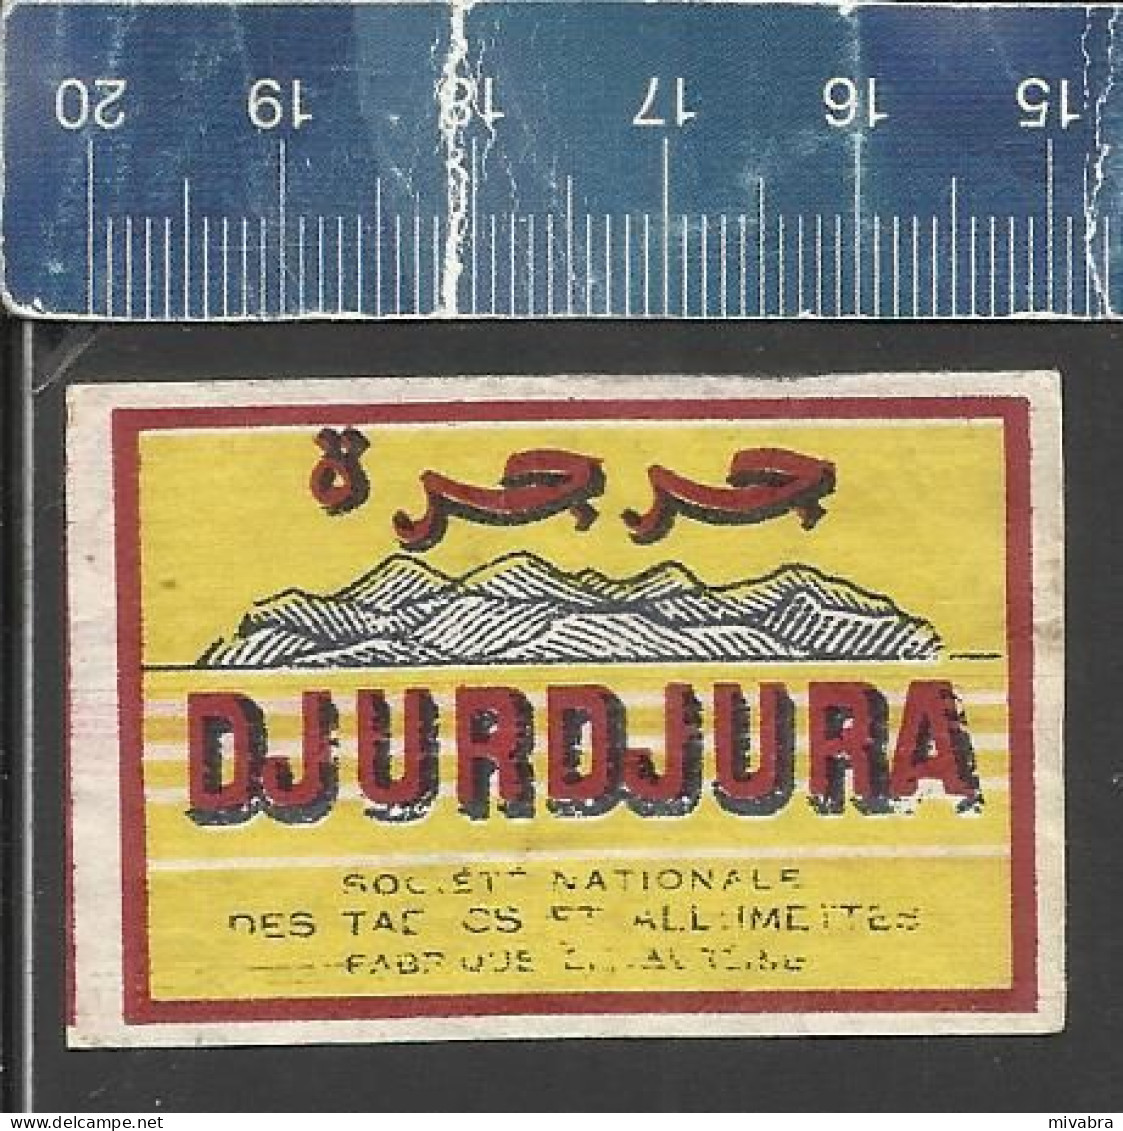 DJURDJURA ( MOUNTAIN RANGE OF THE TELL ATLAS ) - OLD MATCHBOX LABEL ALGERIA - Cajas De Cerillas - Etiquetas